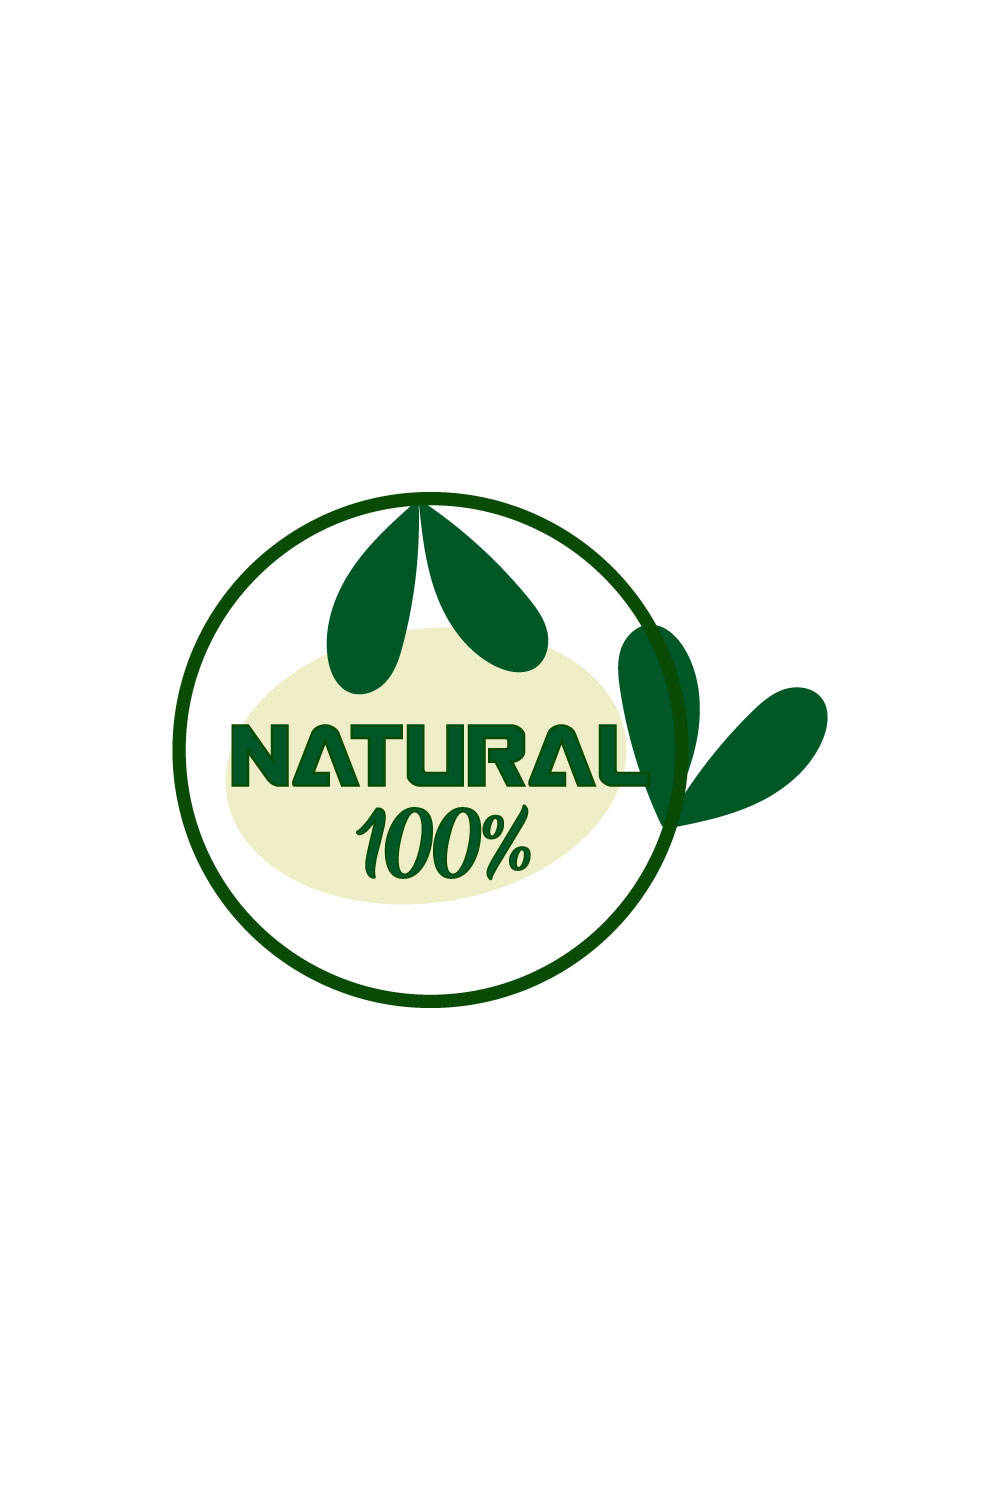 Free nature leaf logo pinterest preview image.